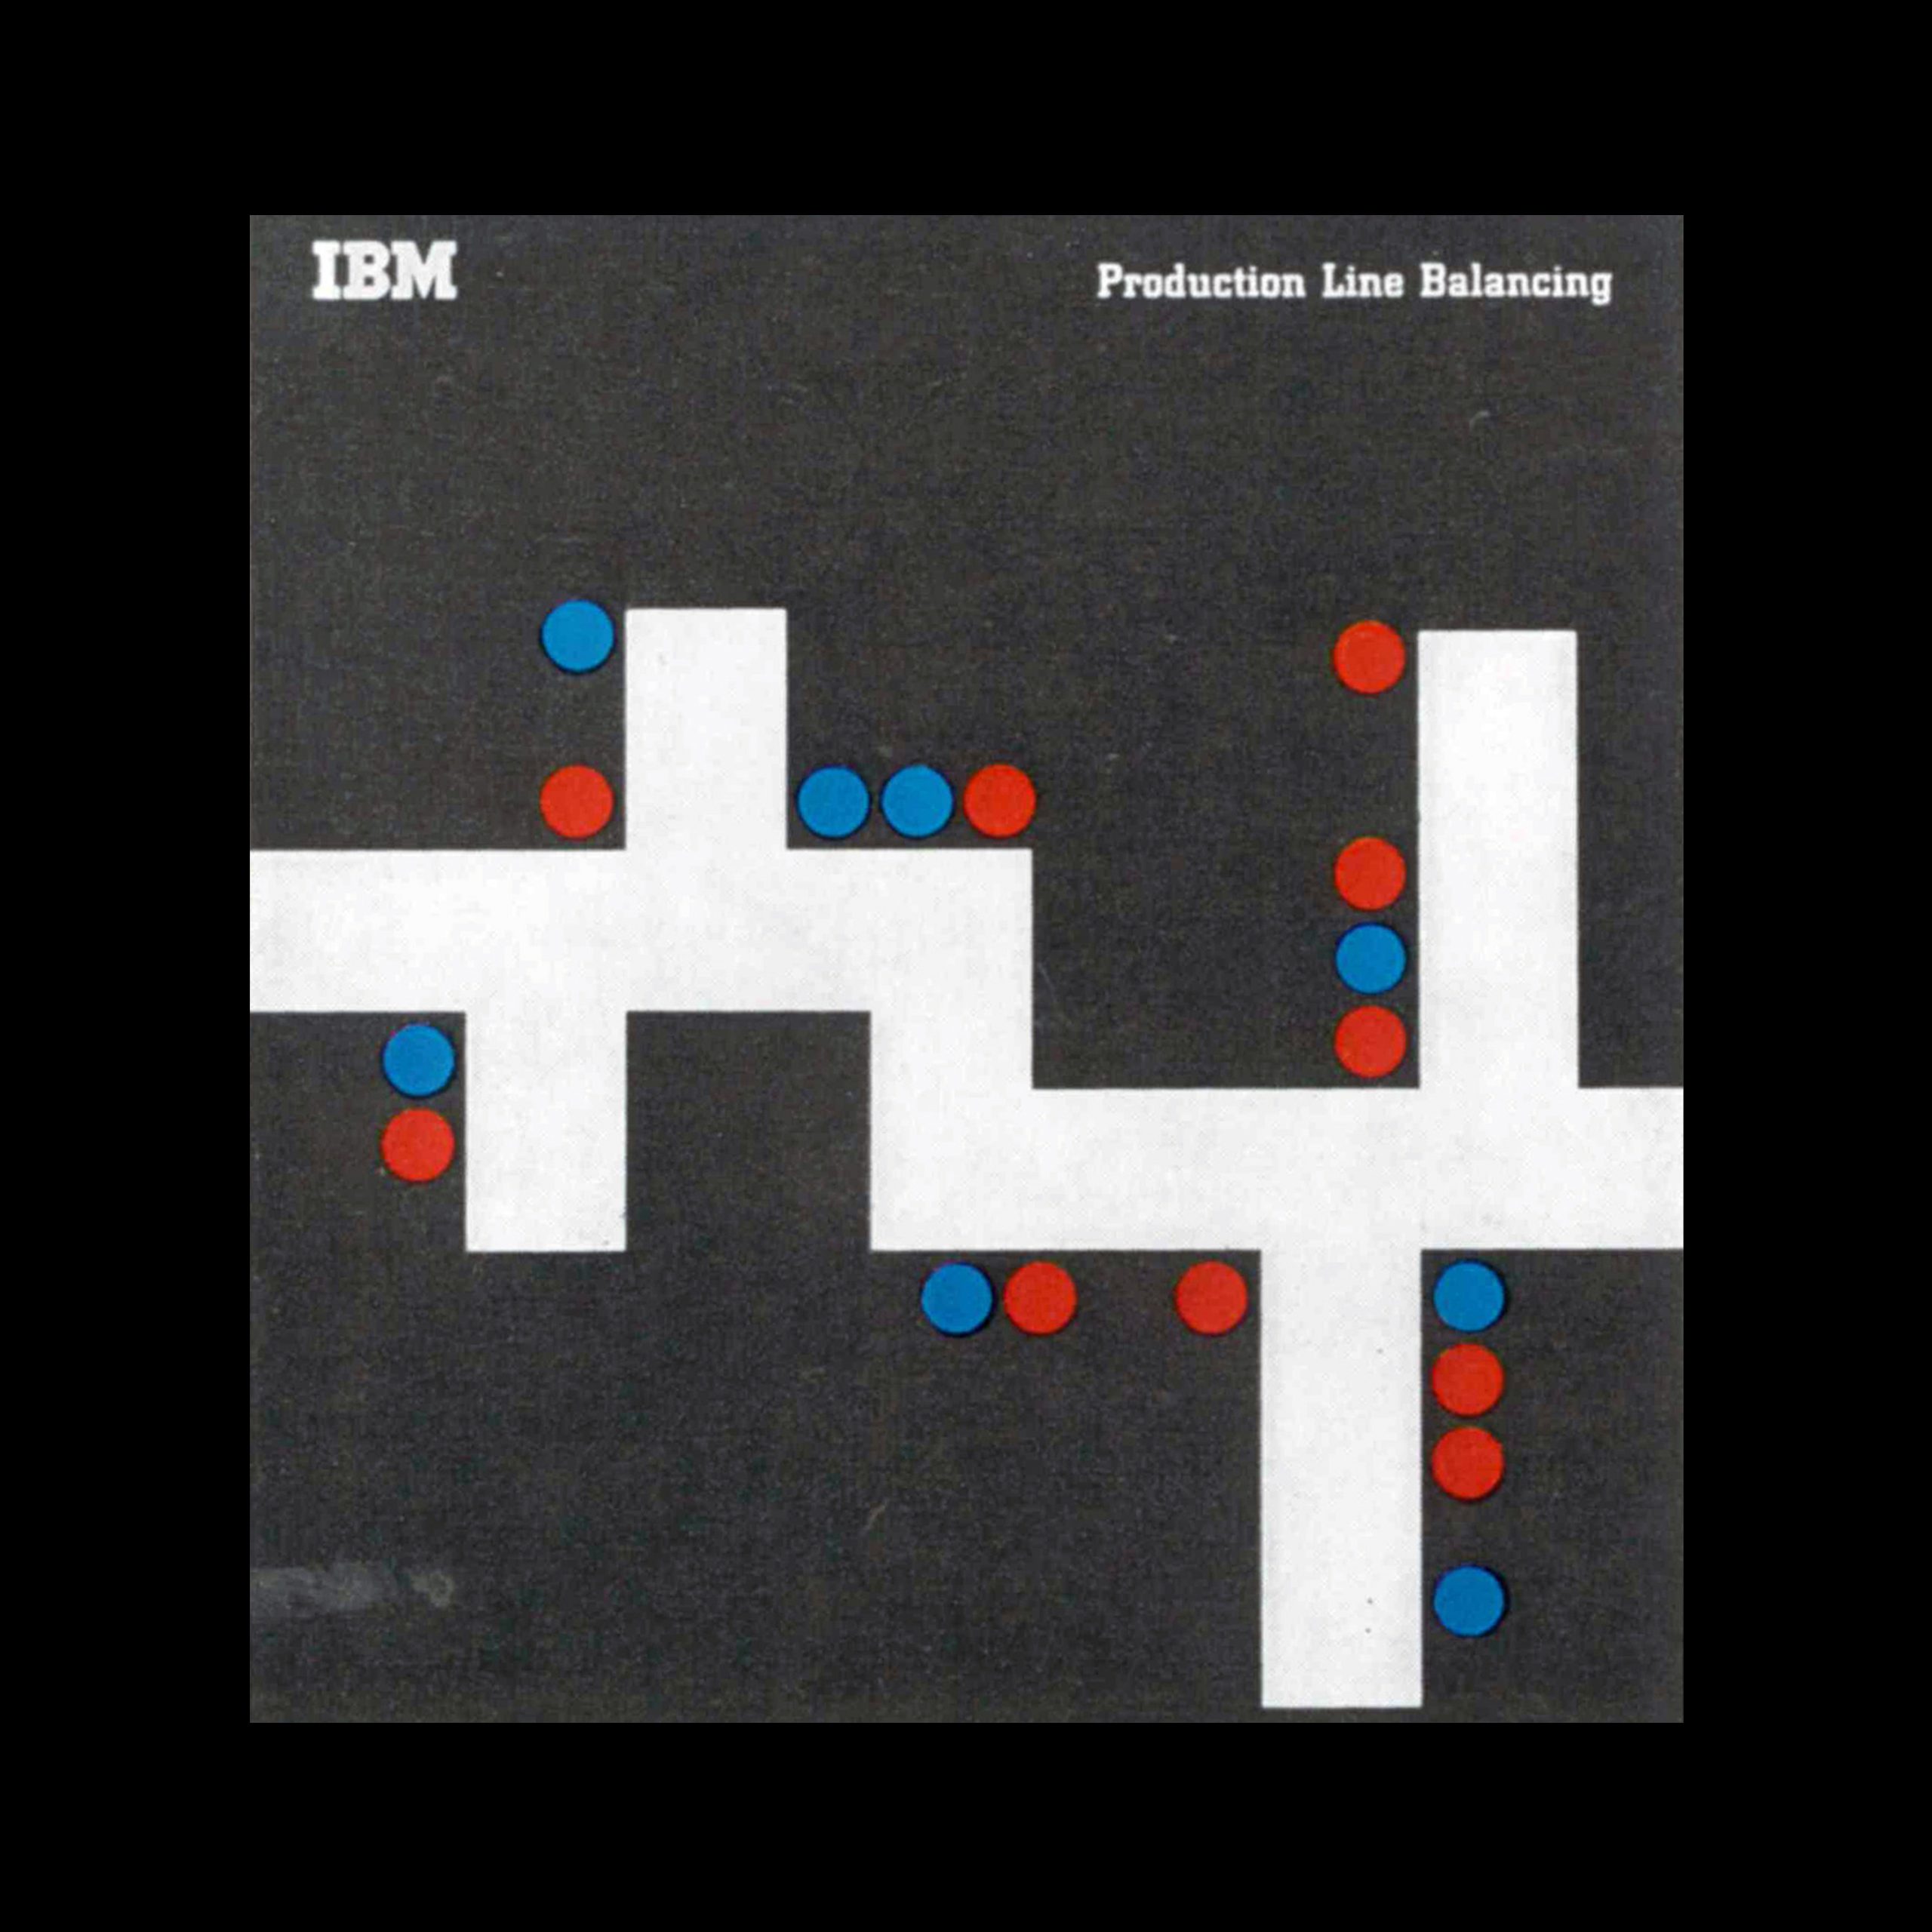 IBM, Equipment Brochure designed by Mary Beresford 